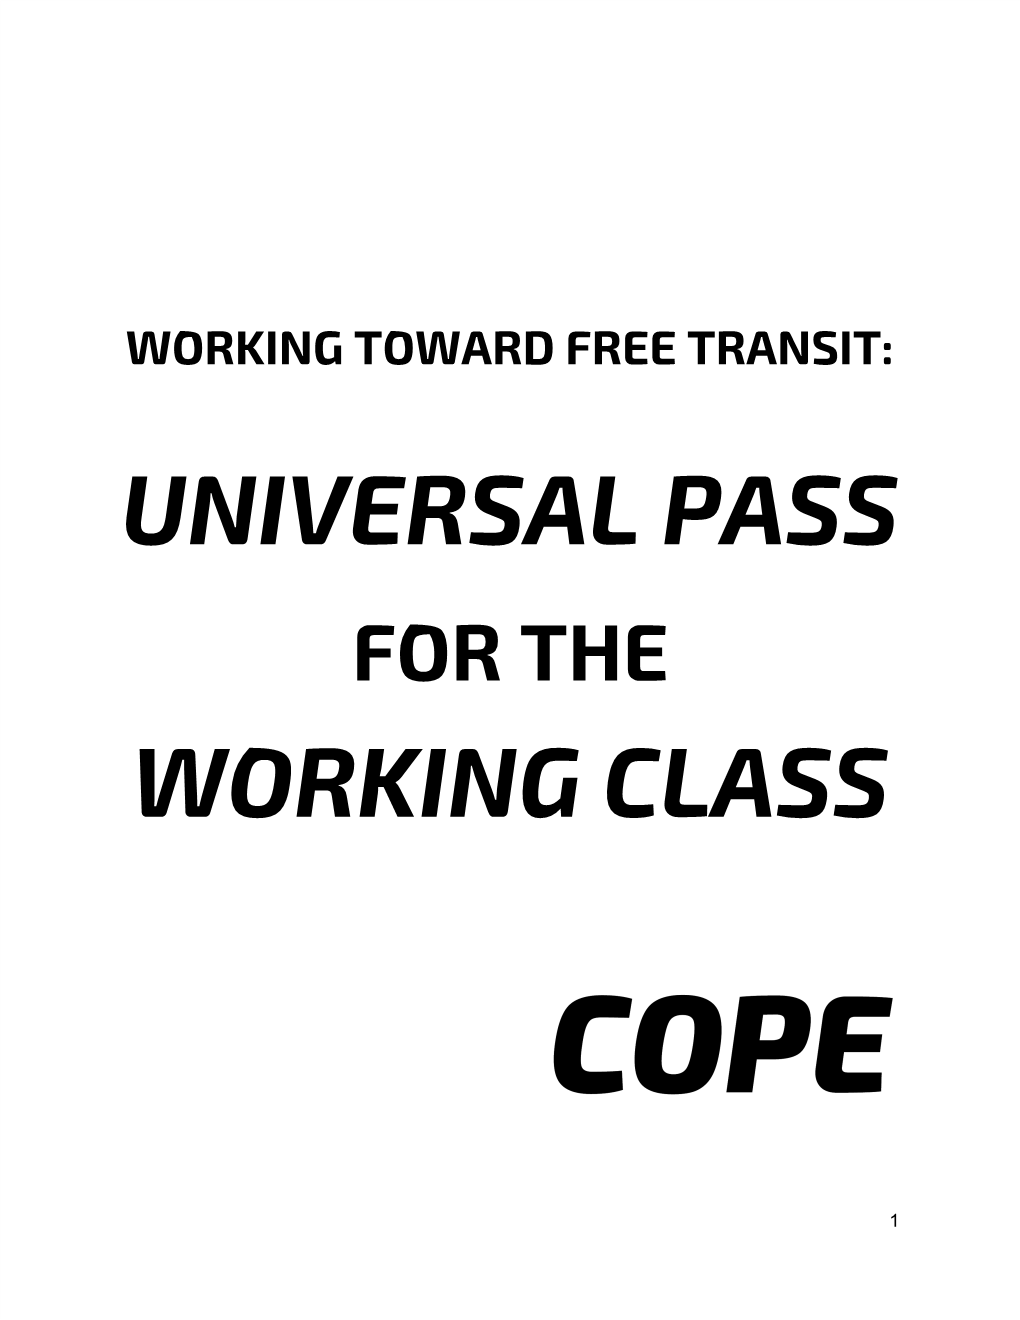 Universal Pass Working Class